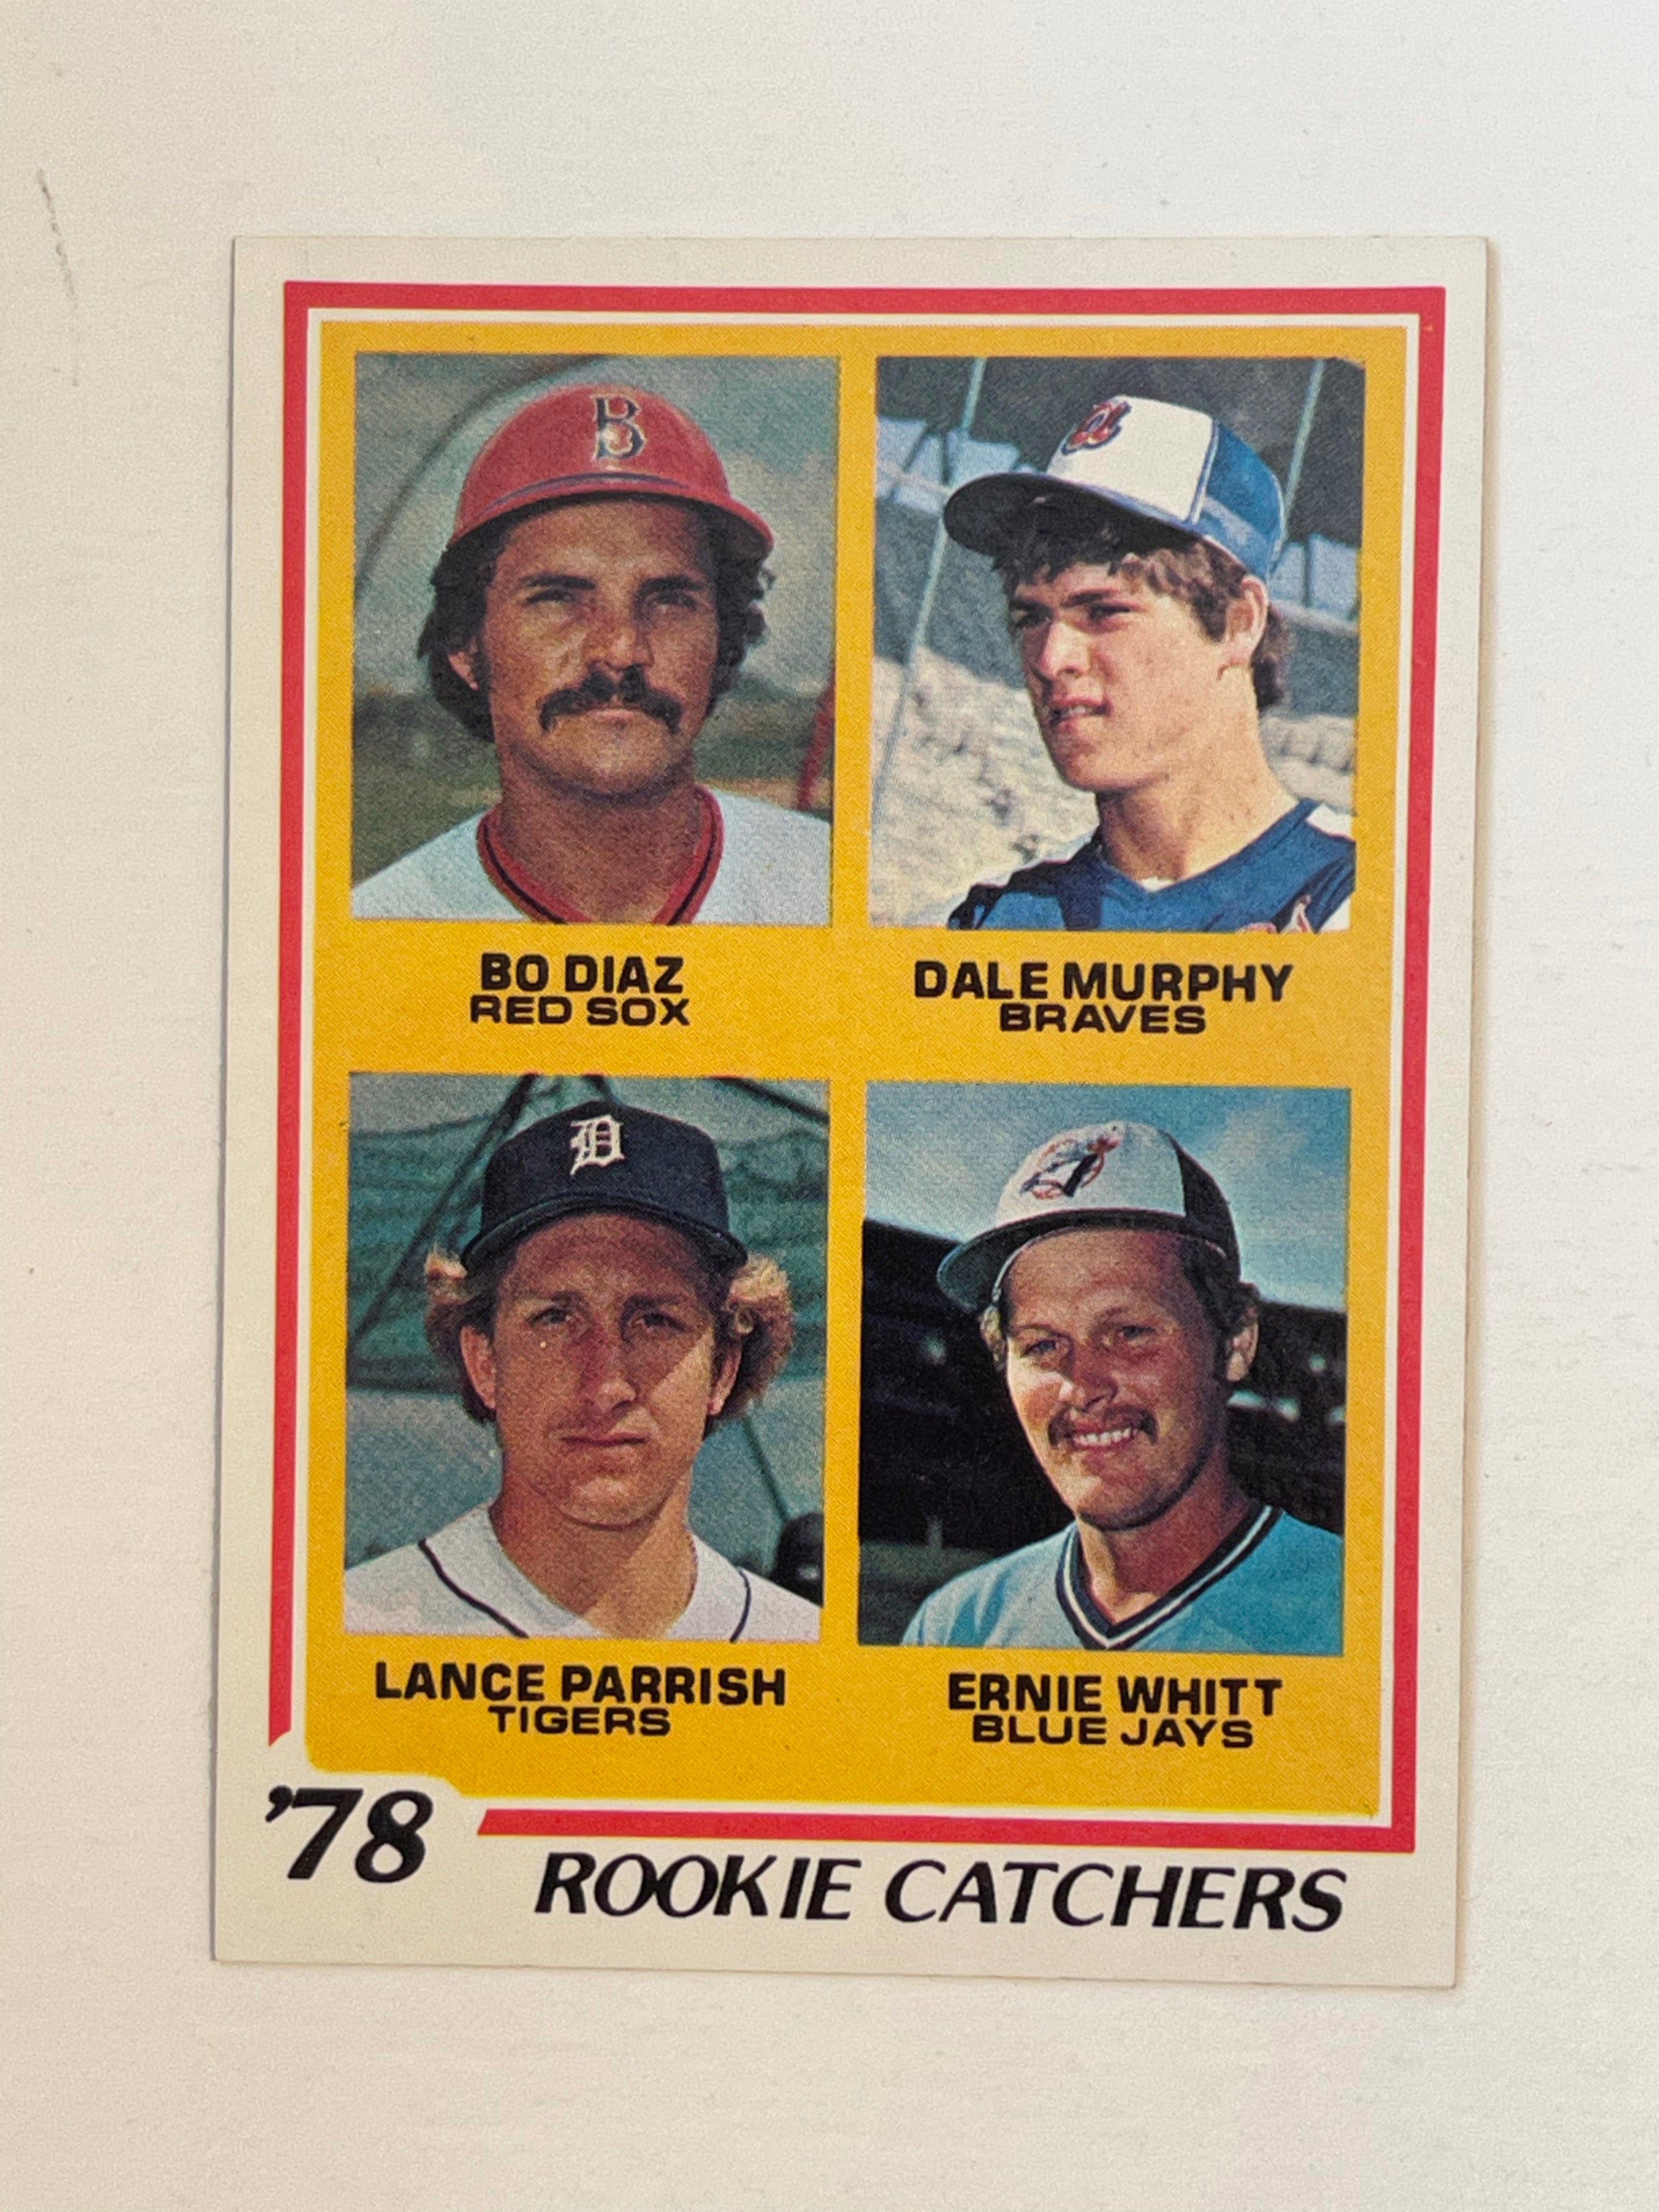 Dale Murphy/Ernie Whitt Topps rookie baseball card